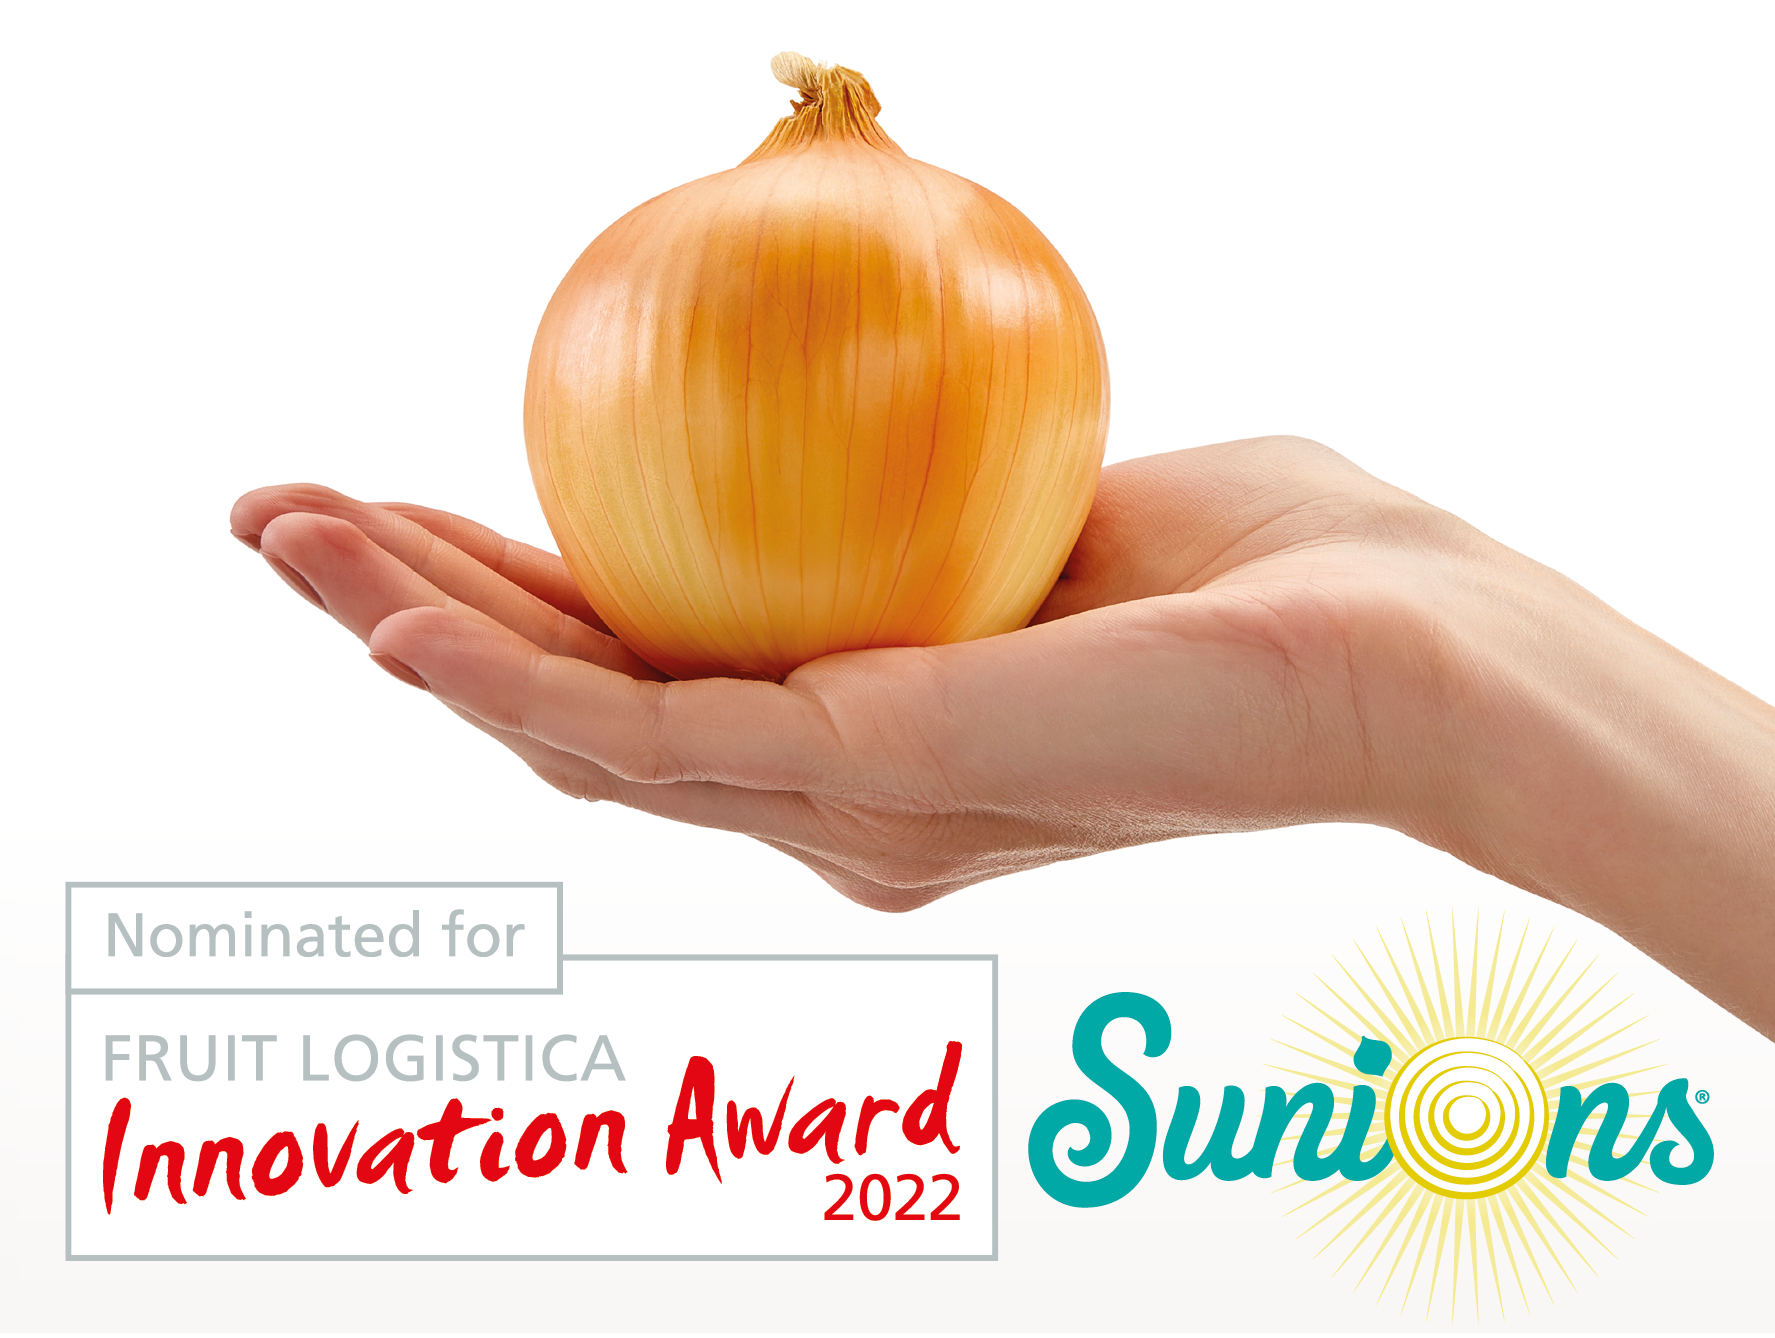 Fruit Logistica 2022 Sunions Innovation Award